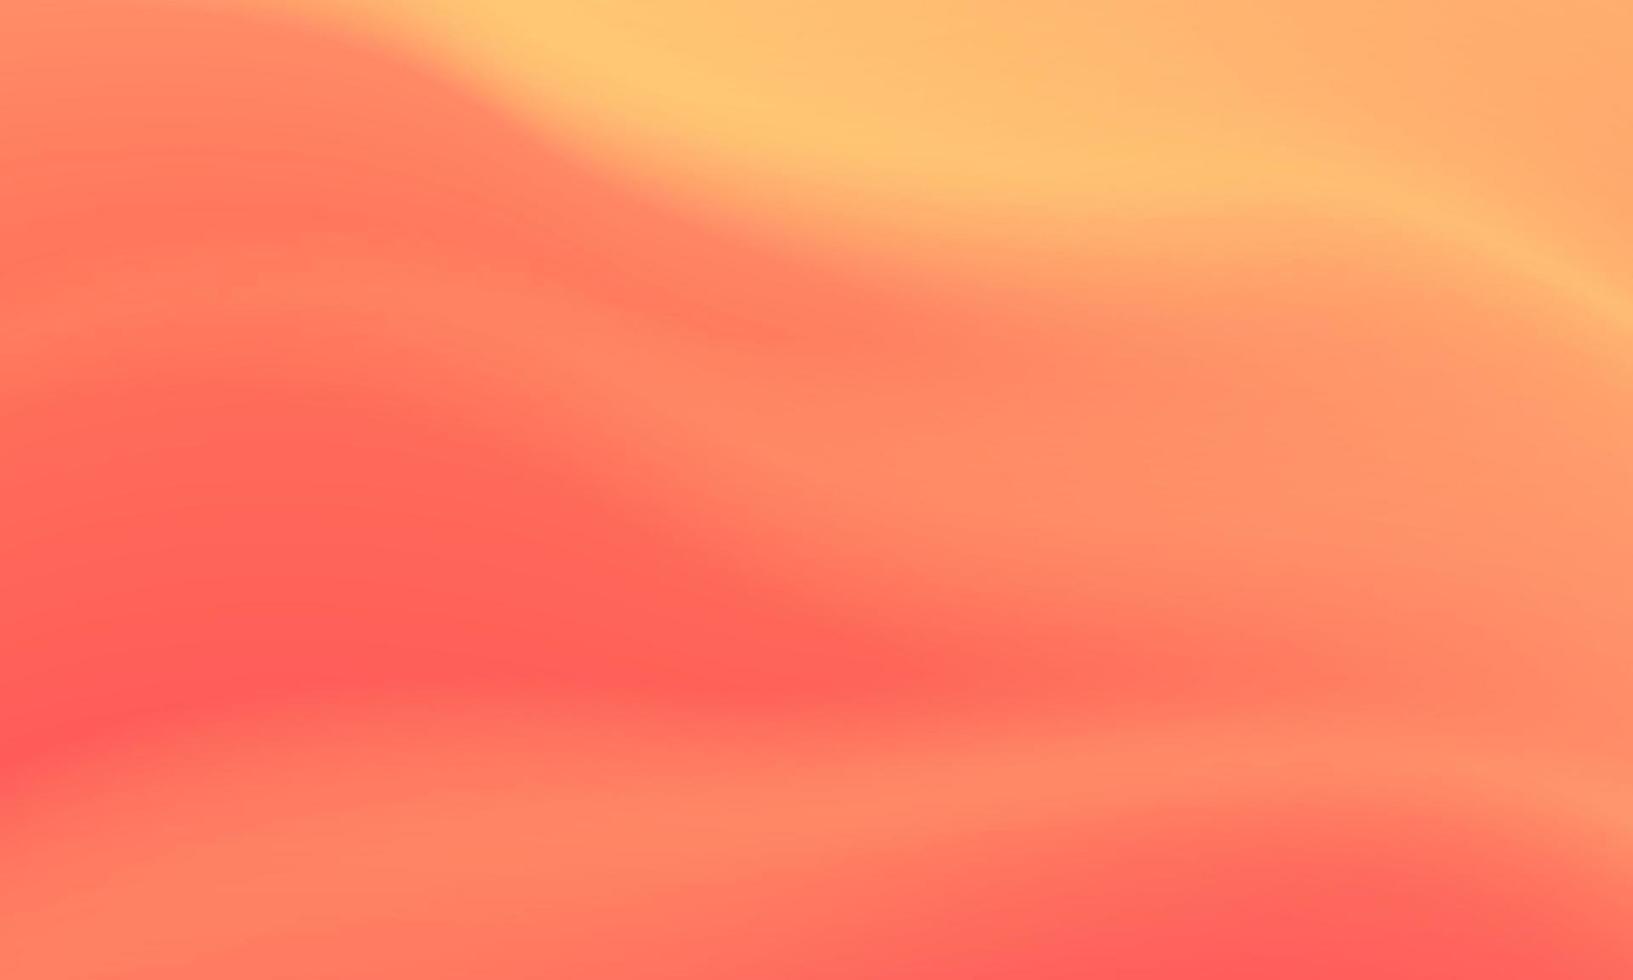 abstract wavy gradient orange modern wallpaper background vector